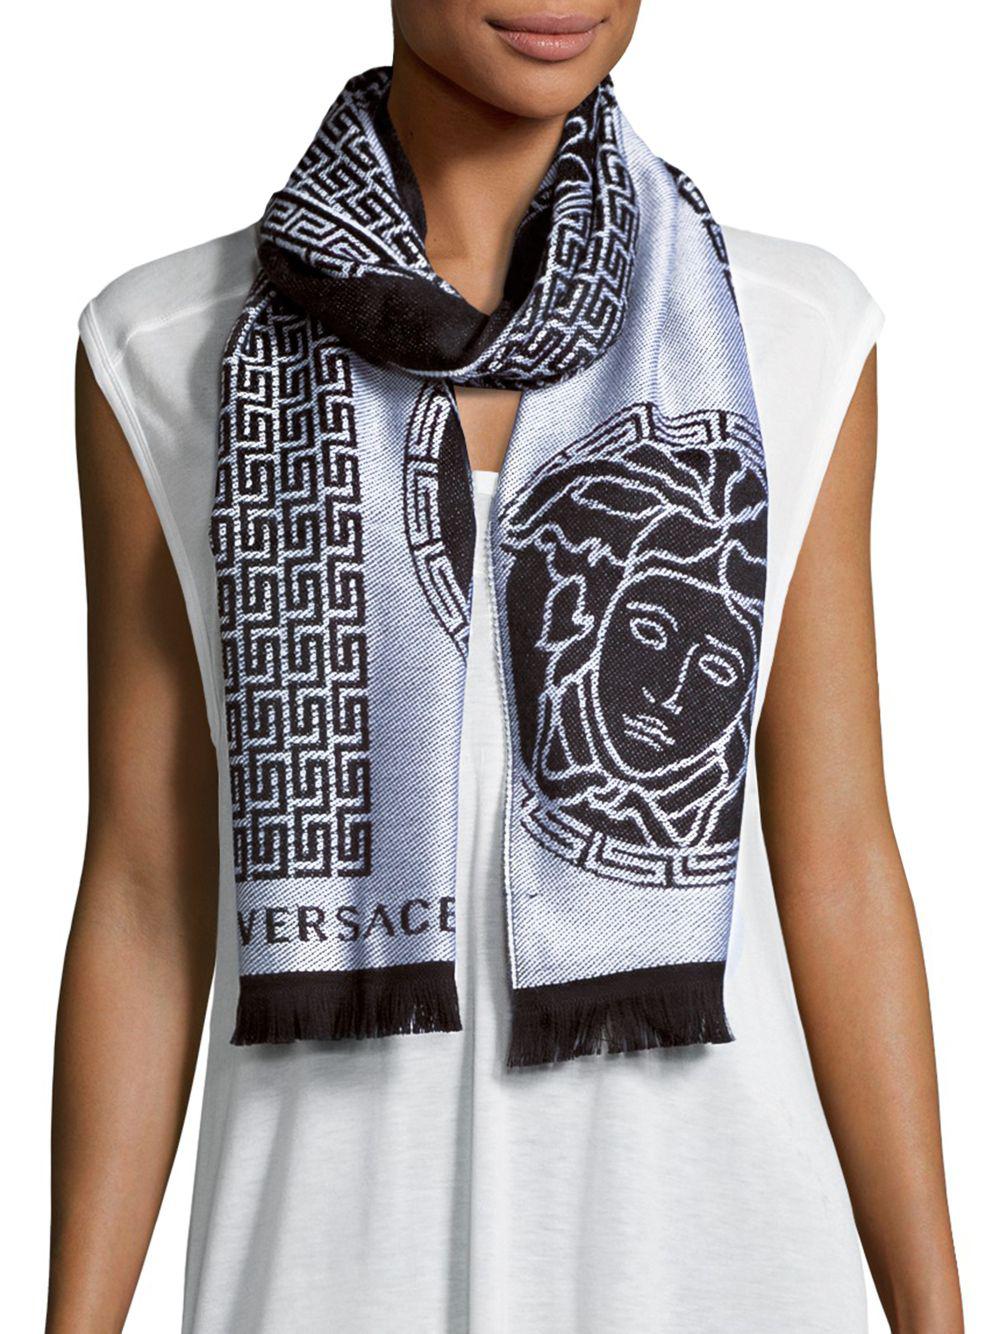 NEW $375 Versace 100% Wool Black Gray Medusa Sciarpa Scarf Authentic Unisex 